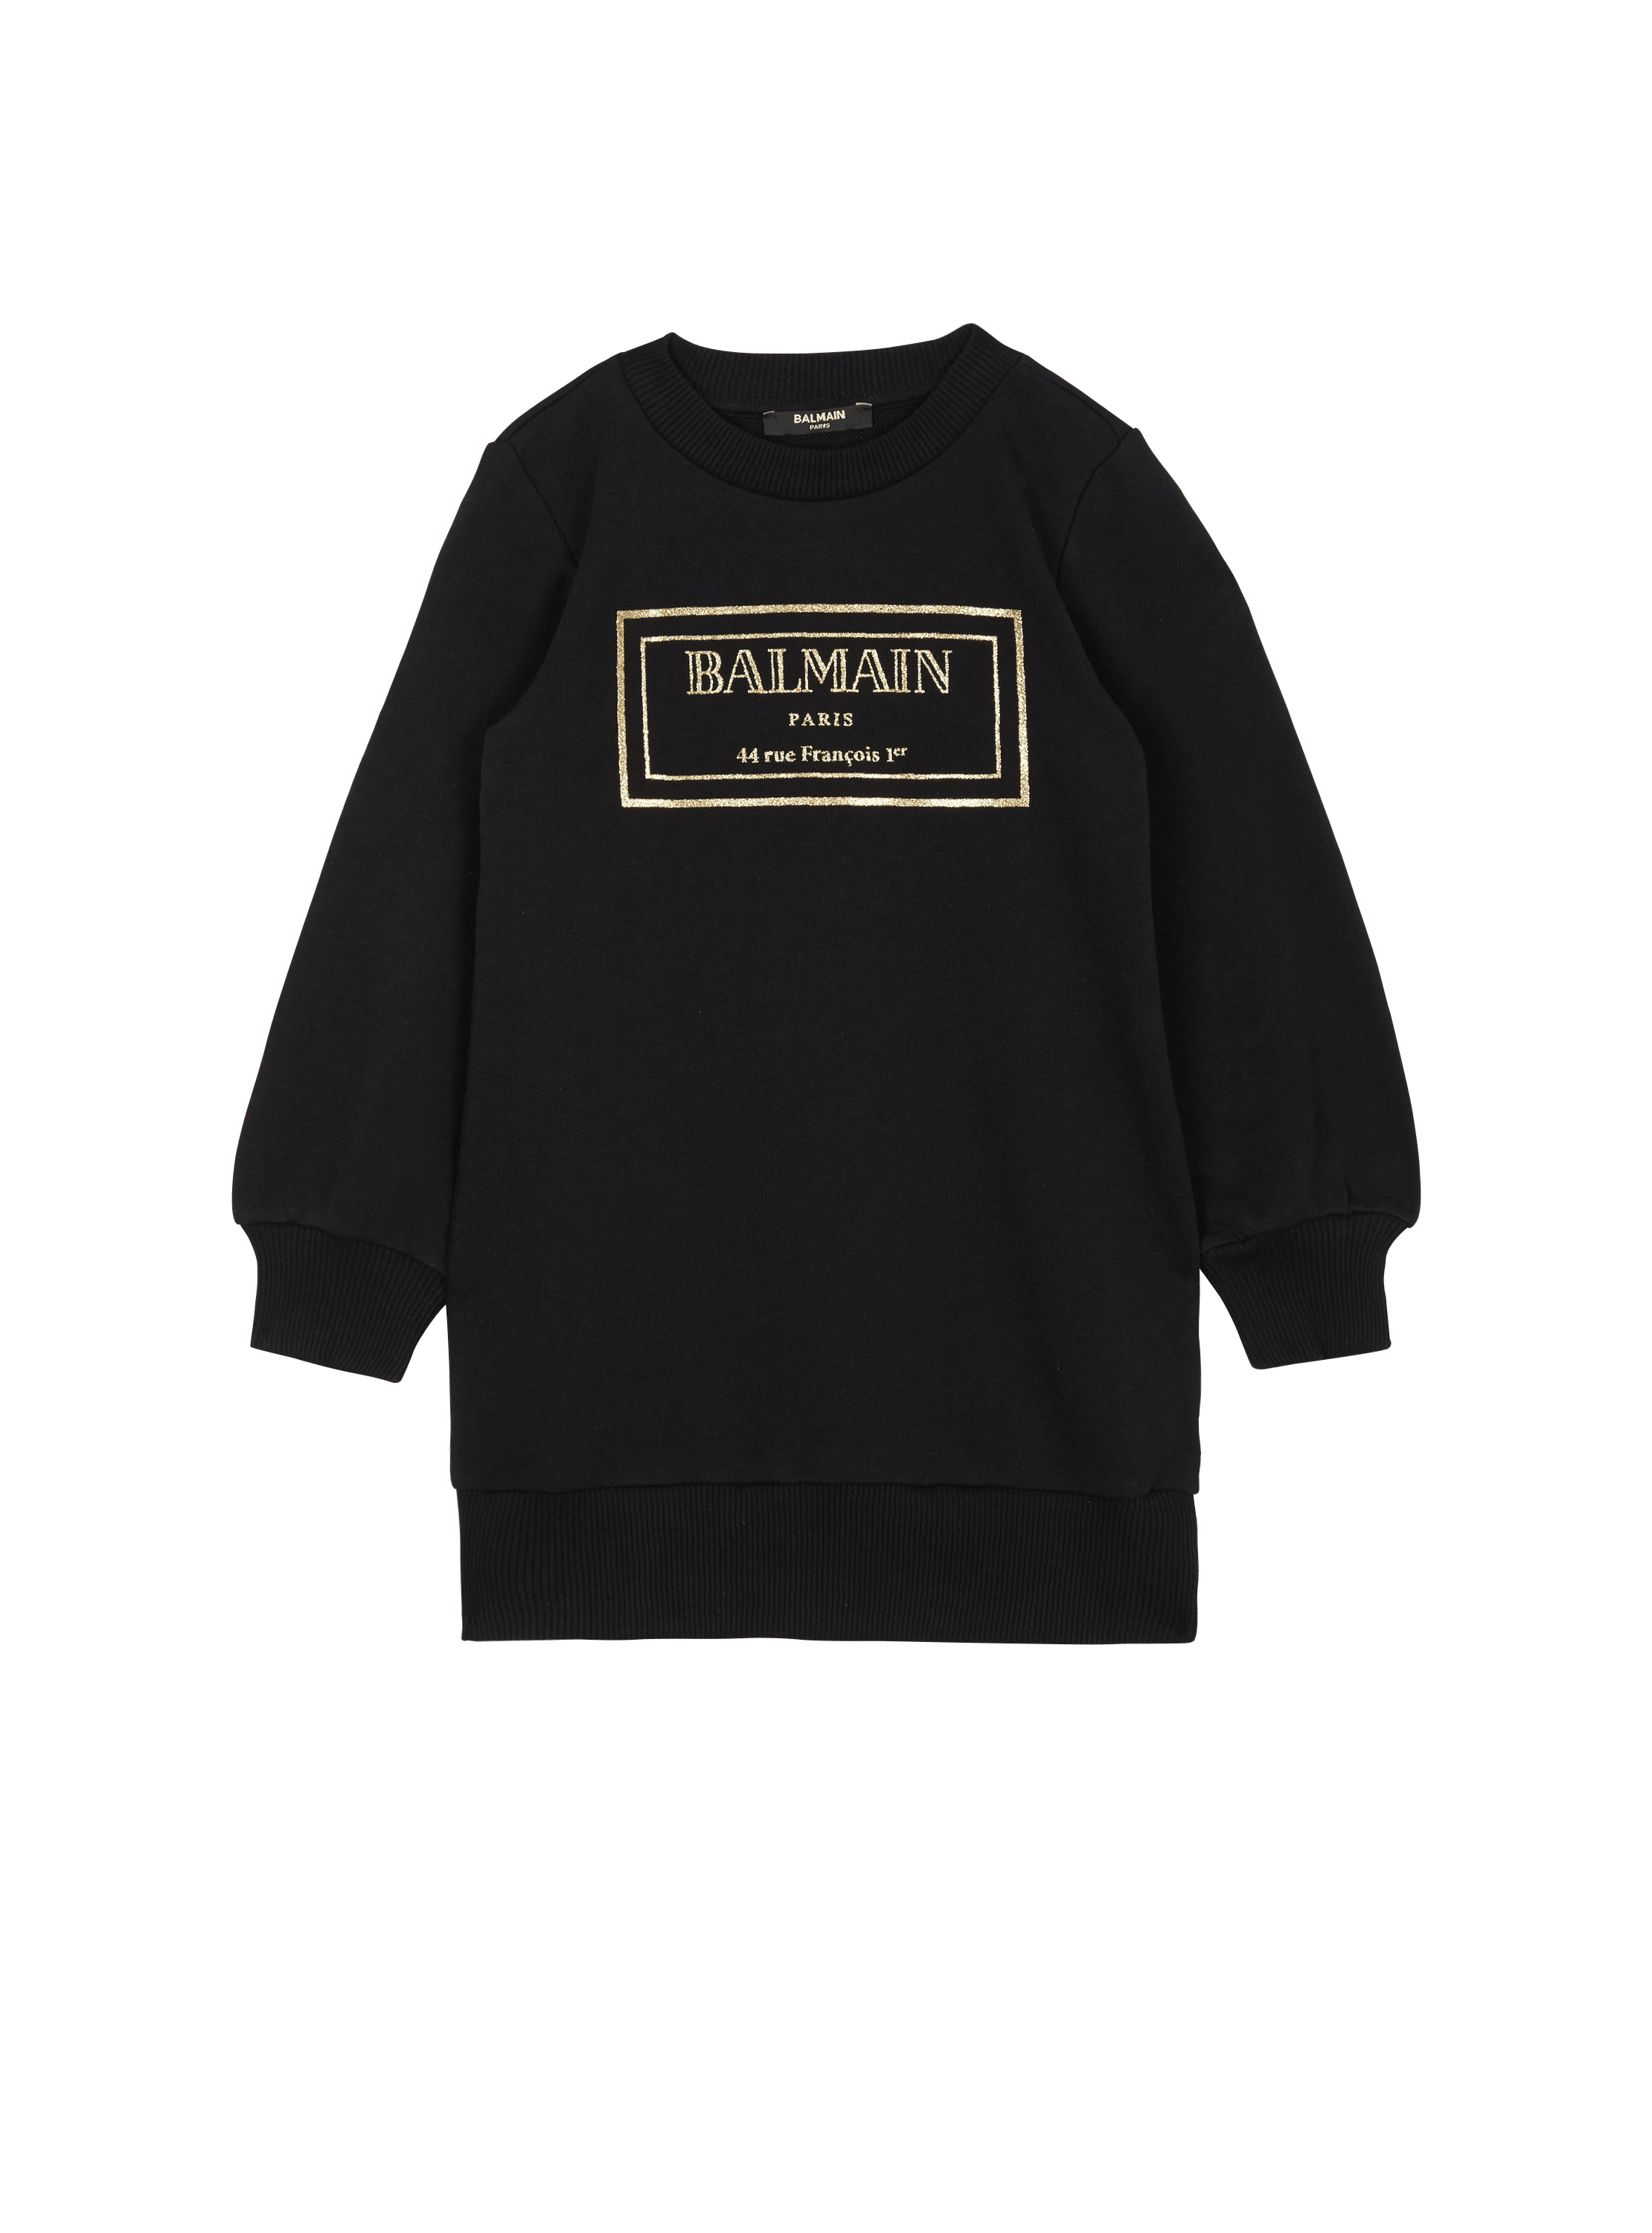 Balmain Paris sweatshirt dress - Child | BALMAIN